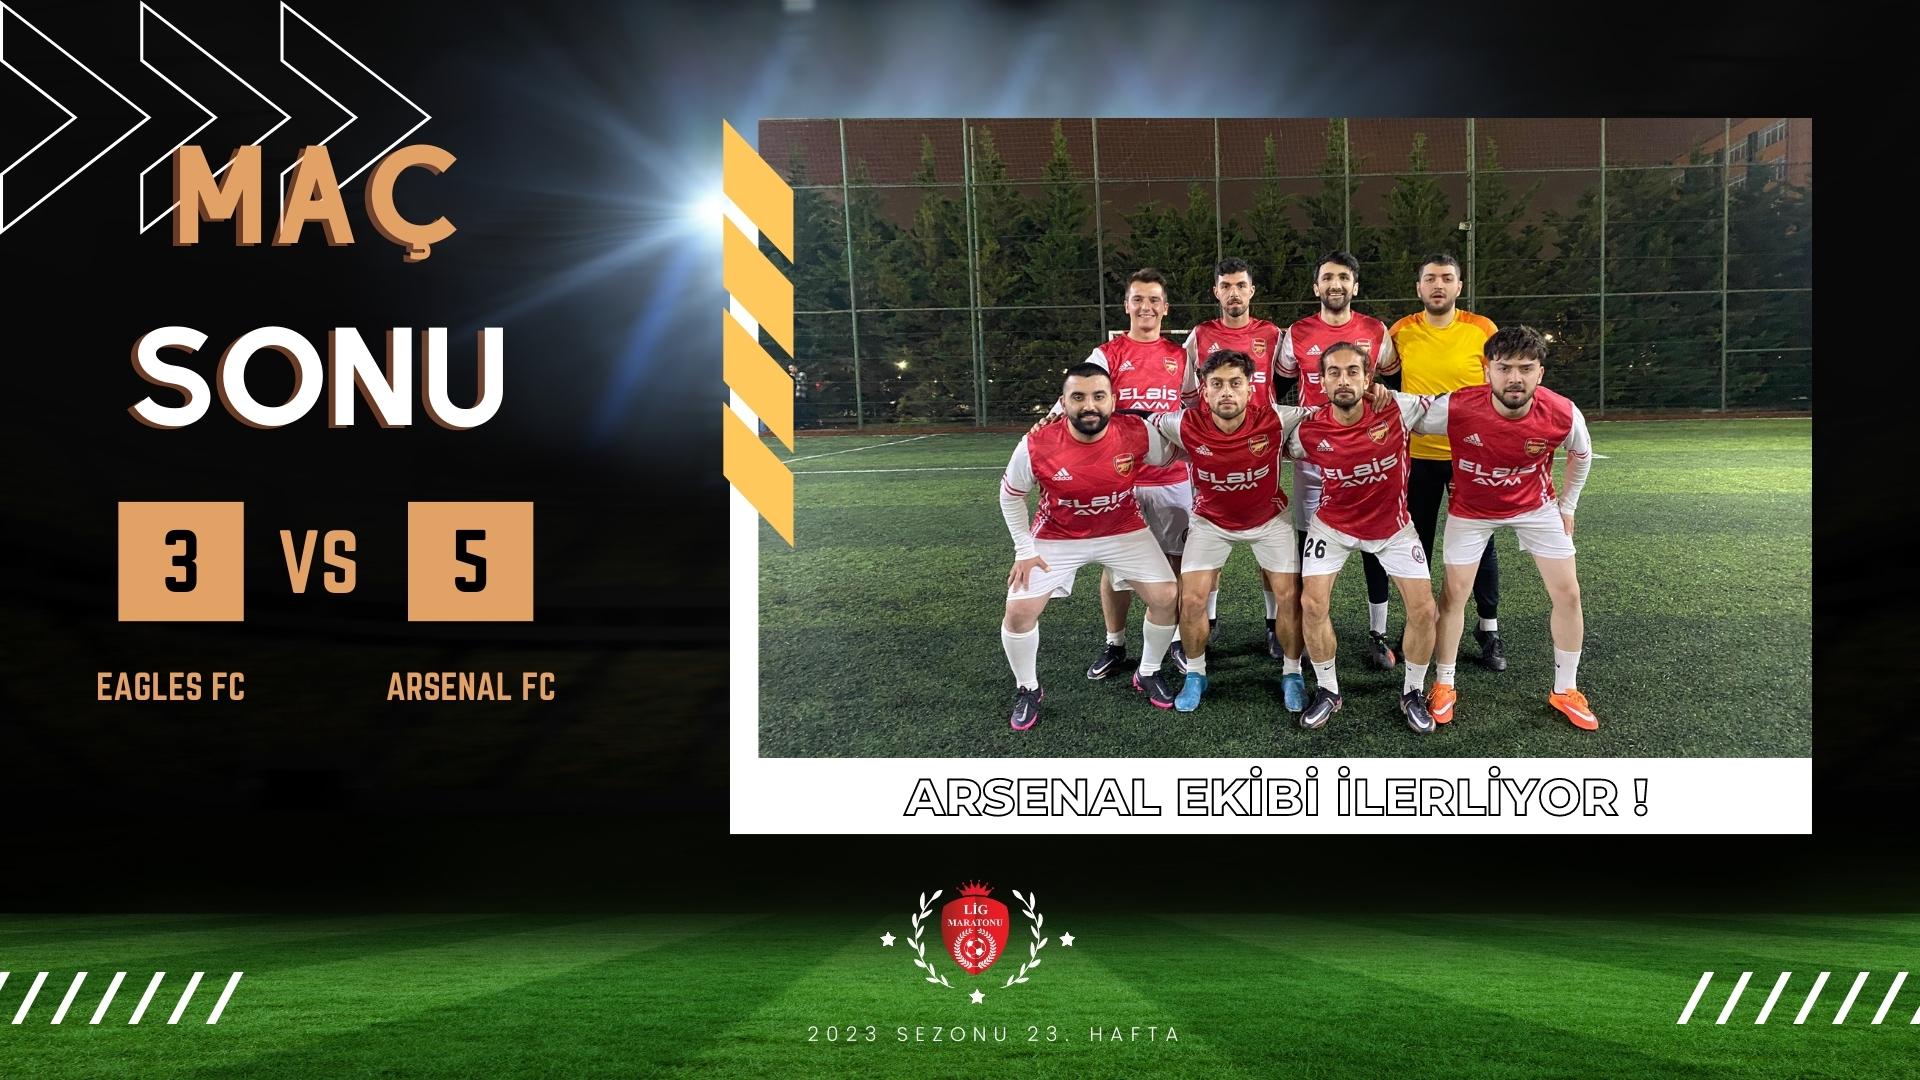 ARSENAL FC DOLU DİZGİN !